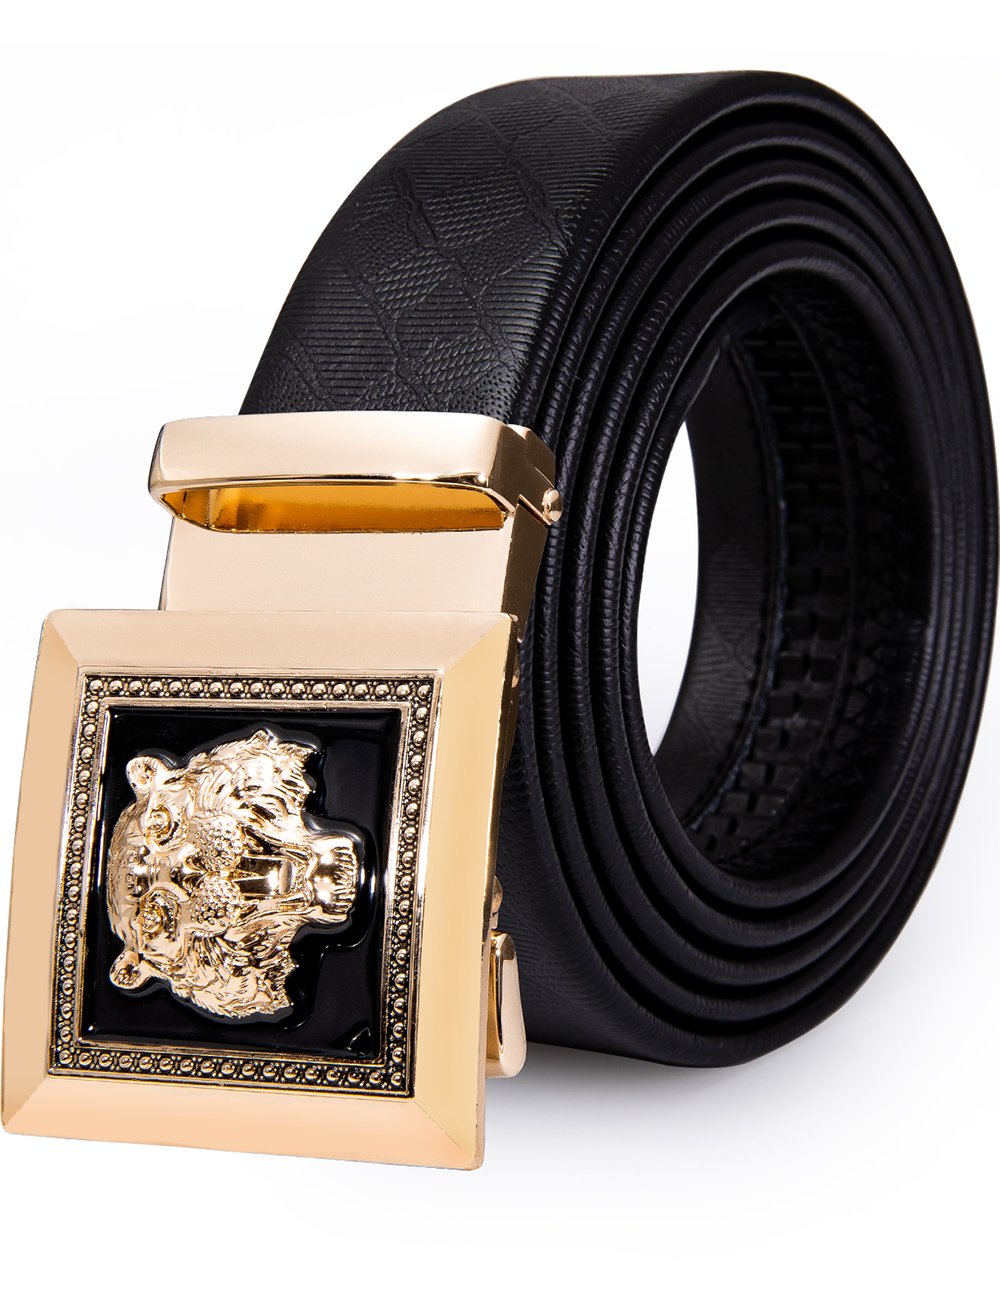 Barry.Wang Fashion Leather Belt Brown Designer Belts for Men Fashion  Cowhide Strap No Buckle 35MM Wide